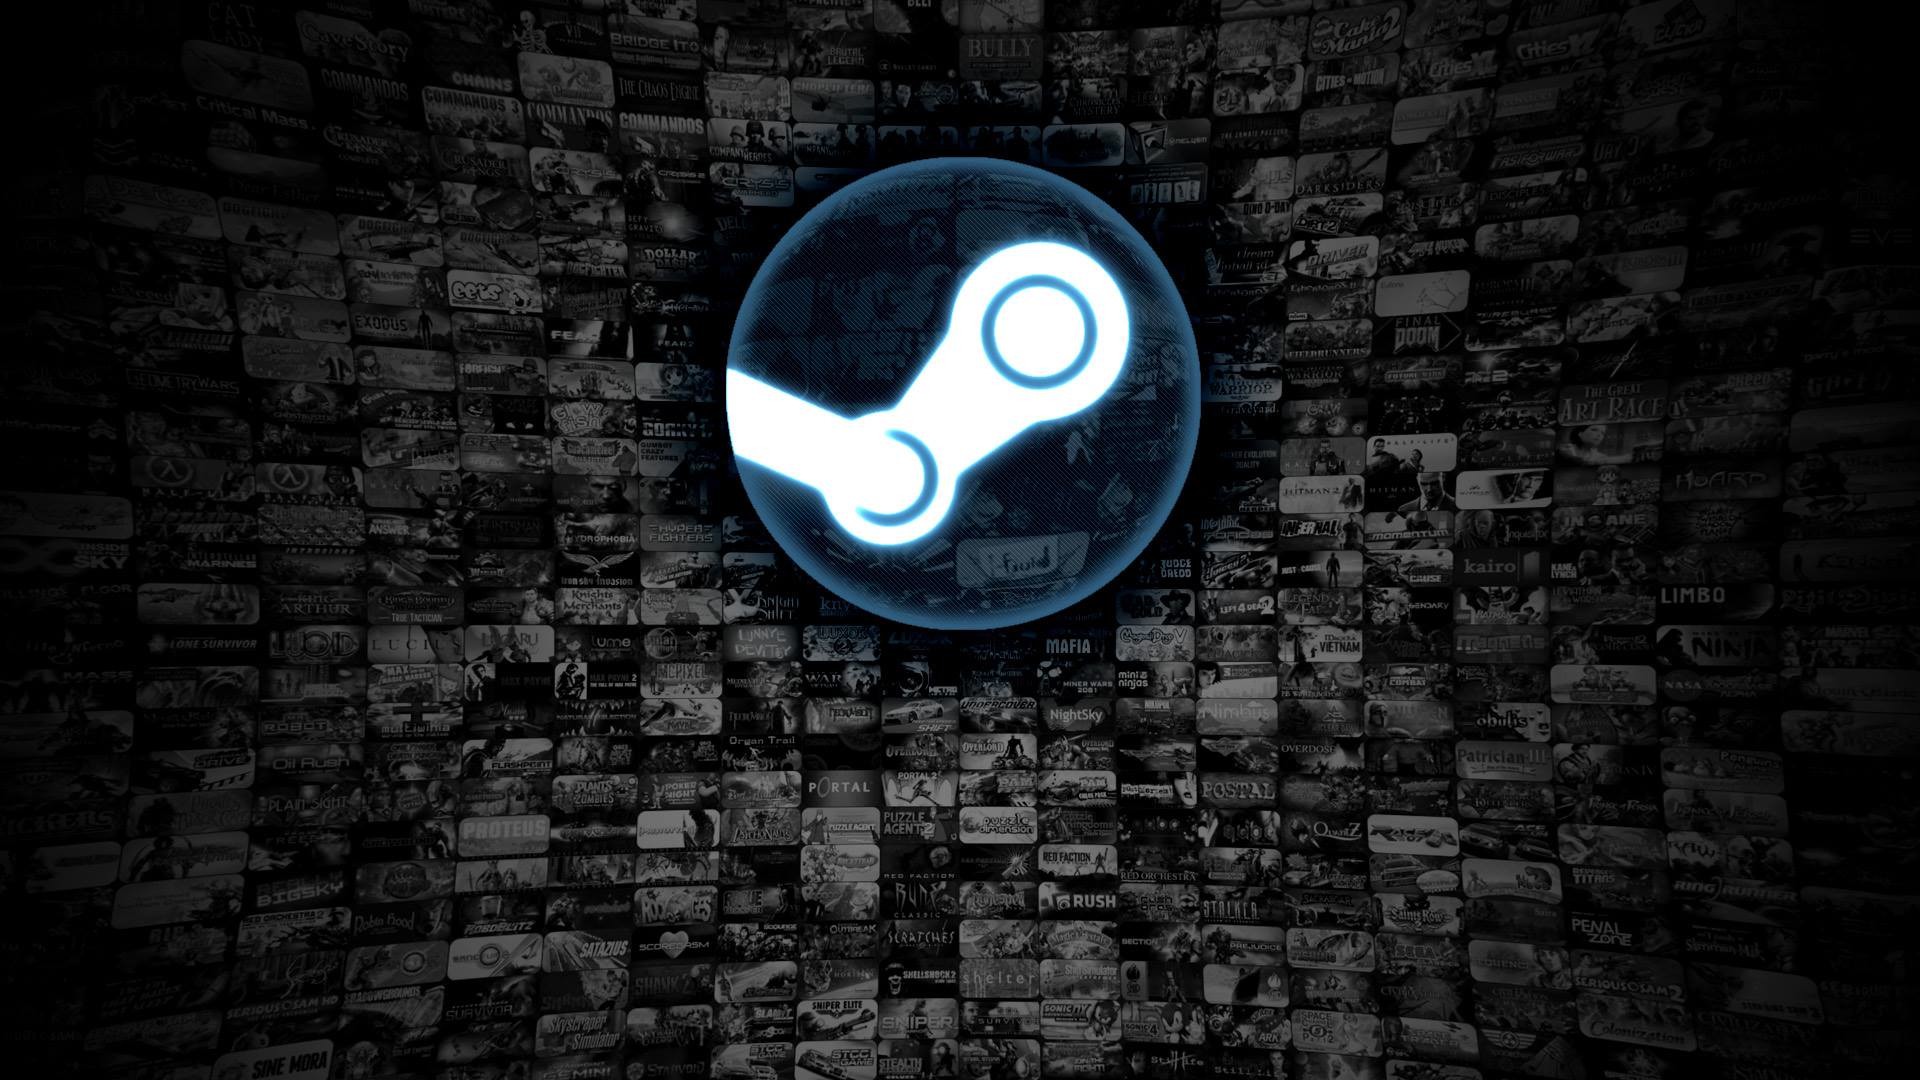 1920x1080 Valve Critiques Steam's Customer Service System: 'We Know It Sucks' -  Valve's rise